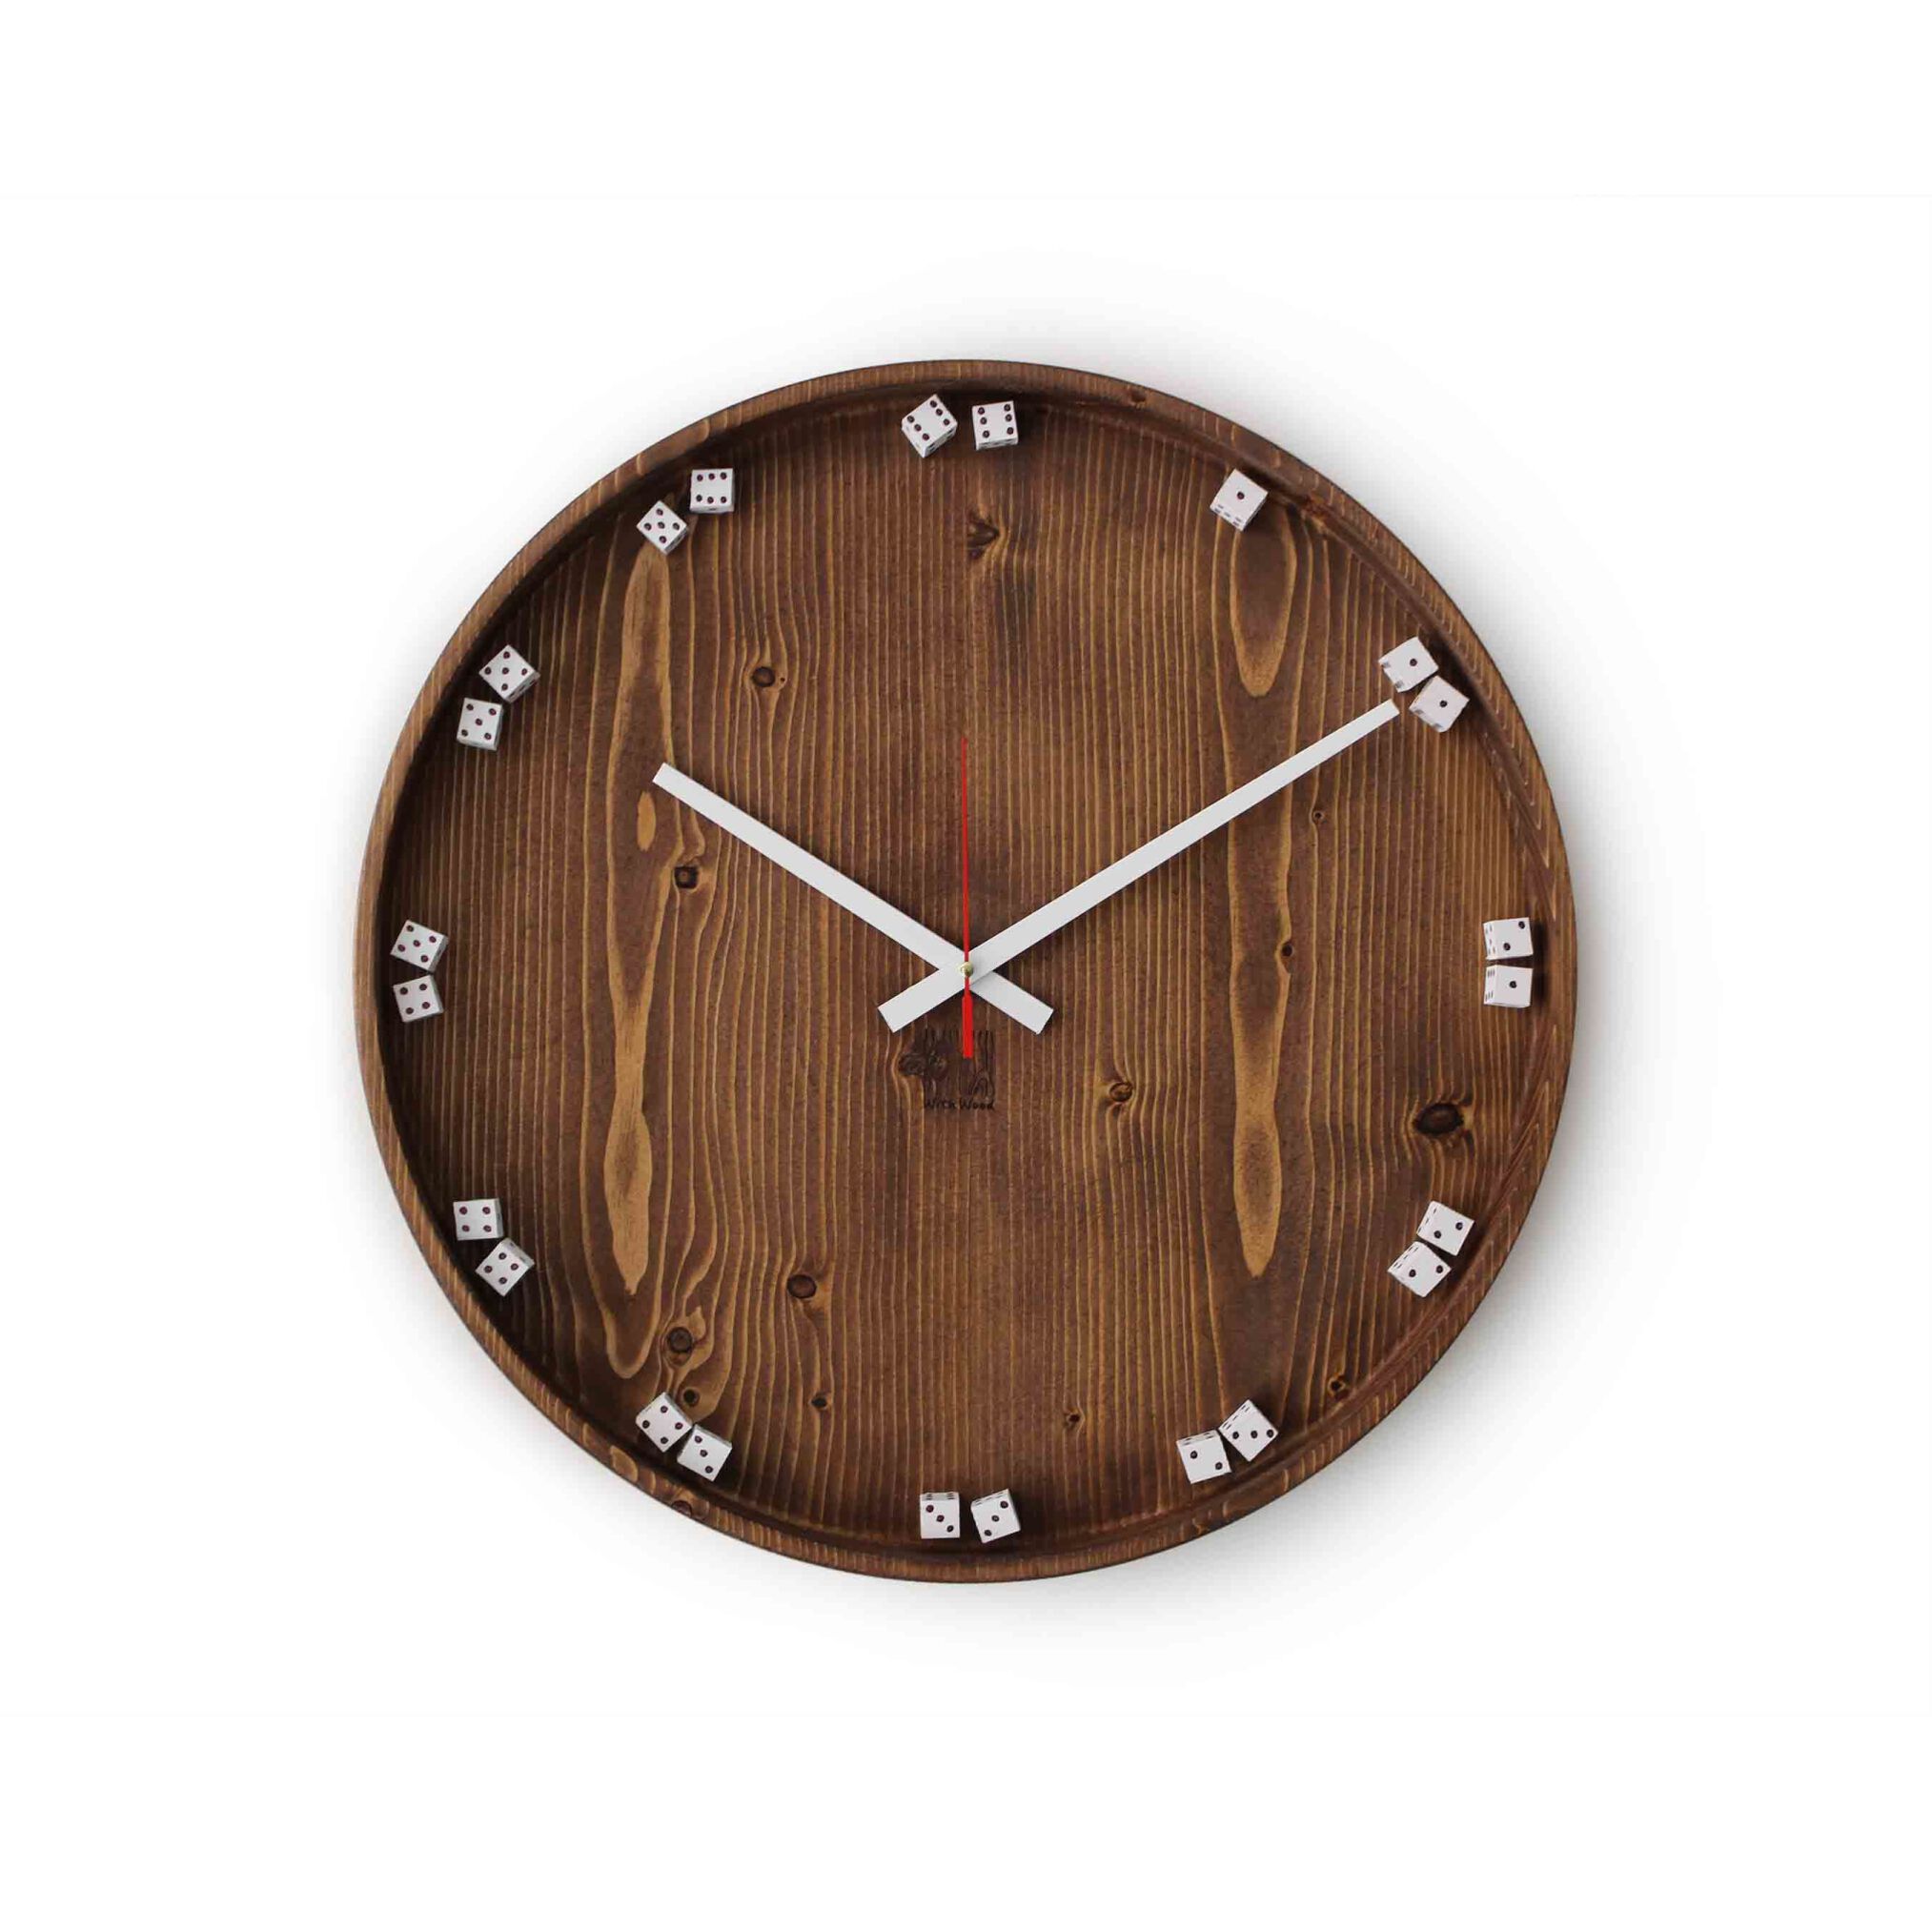  ساعت دیواری تمام چوب مدل تاس | فروشگاه آرتانامیک 